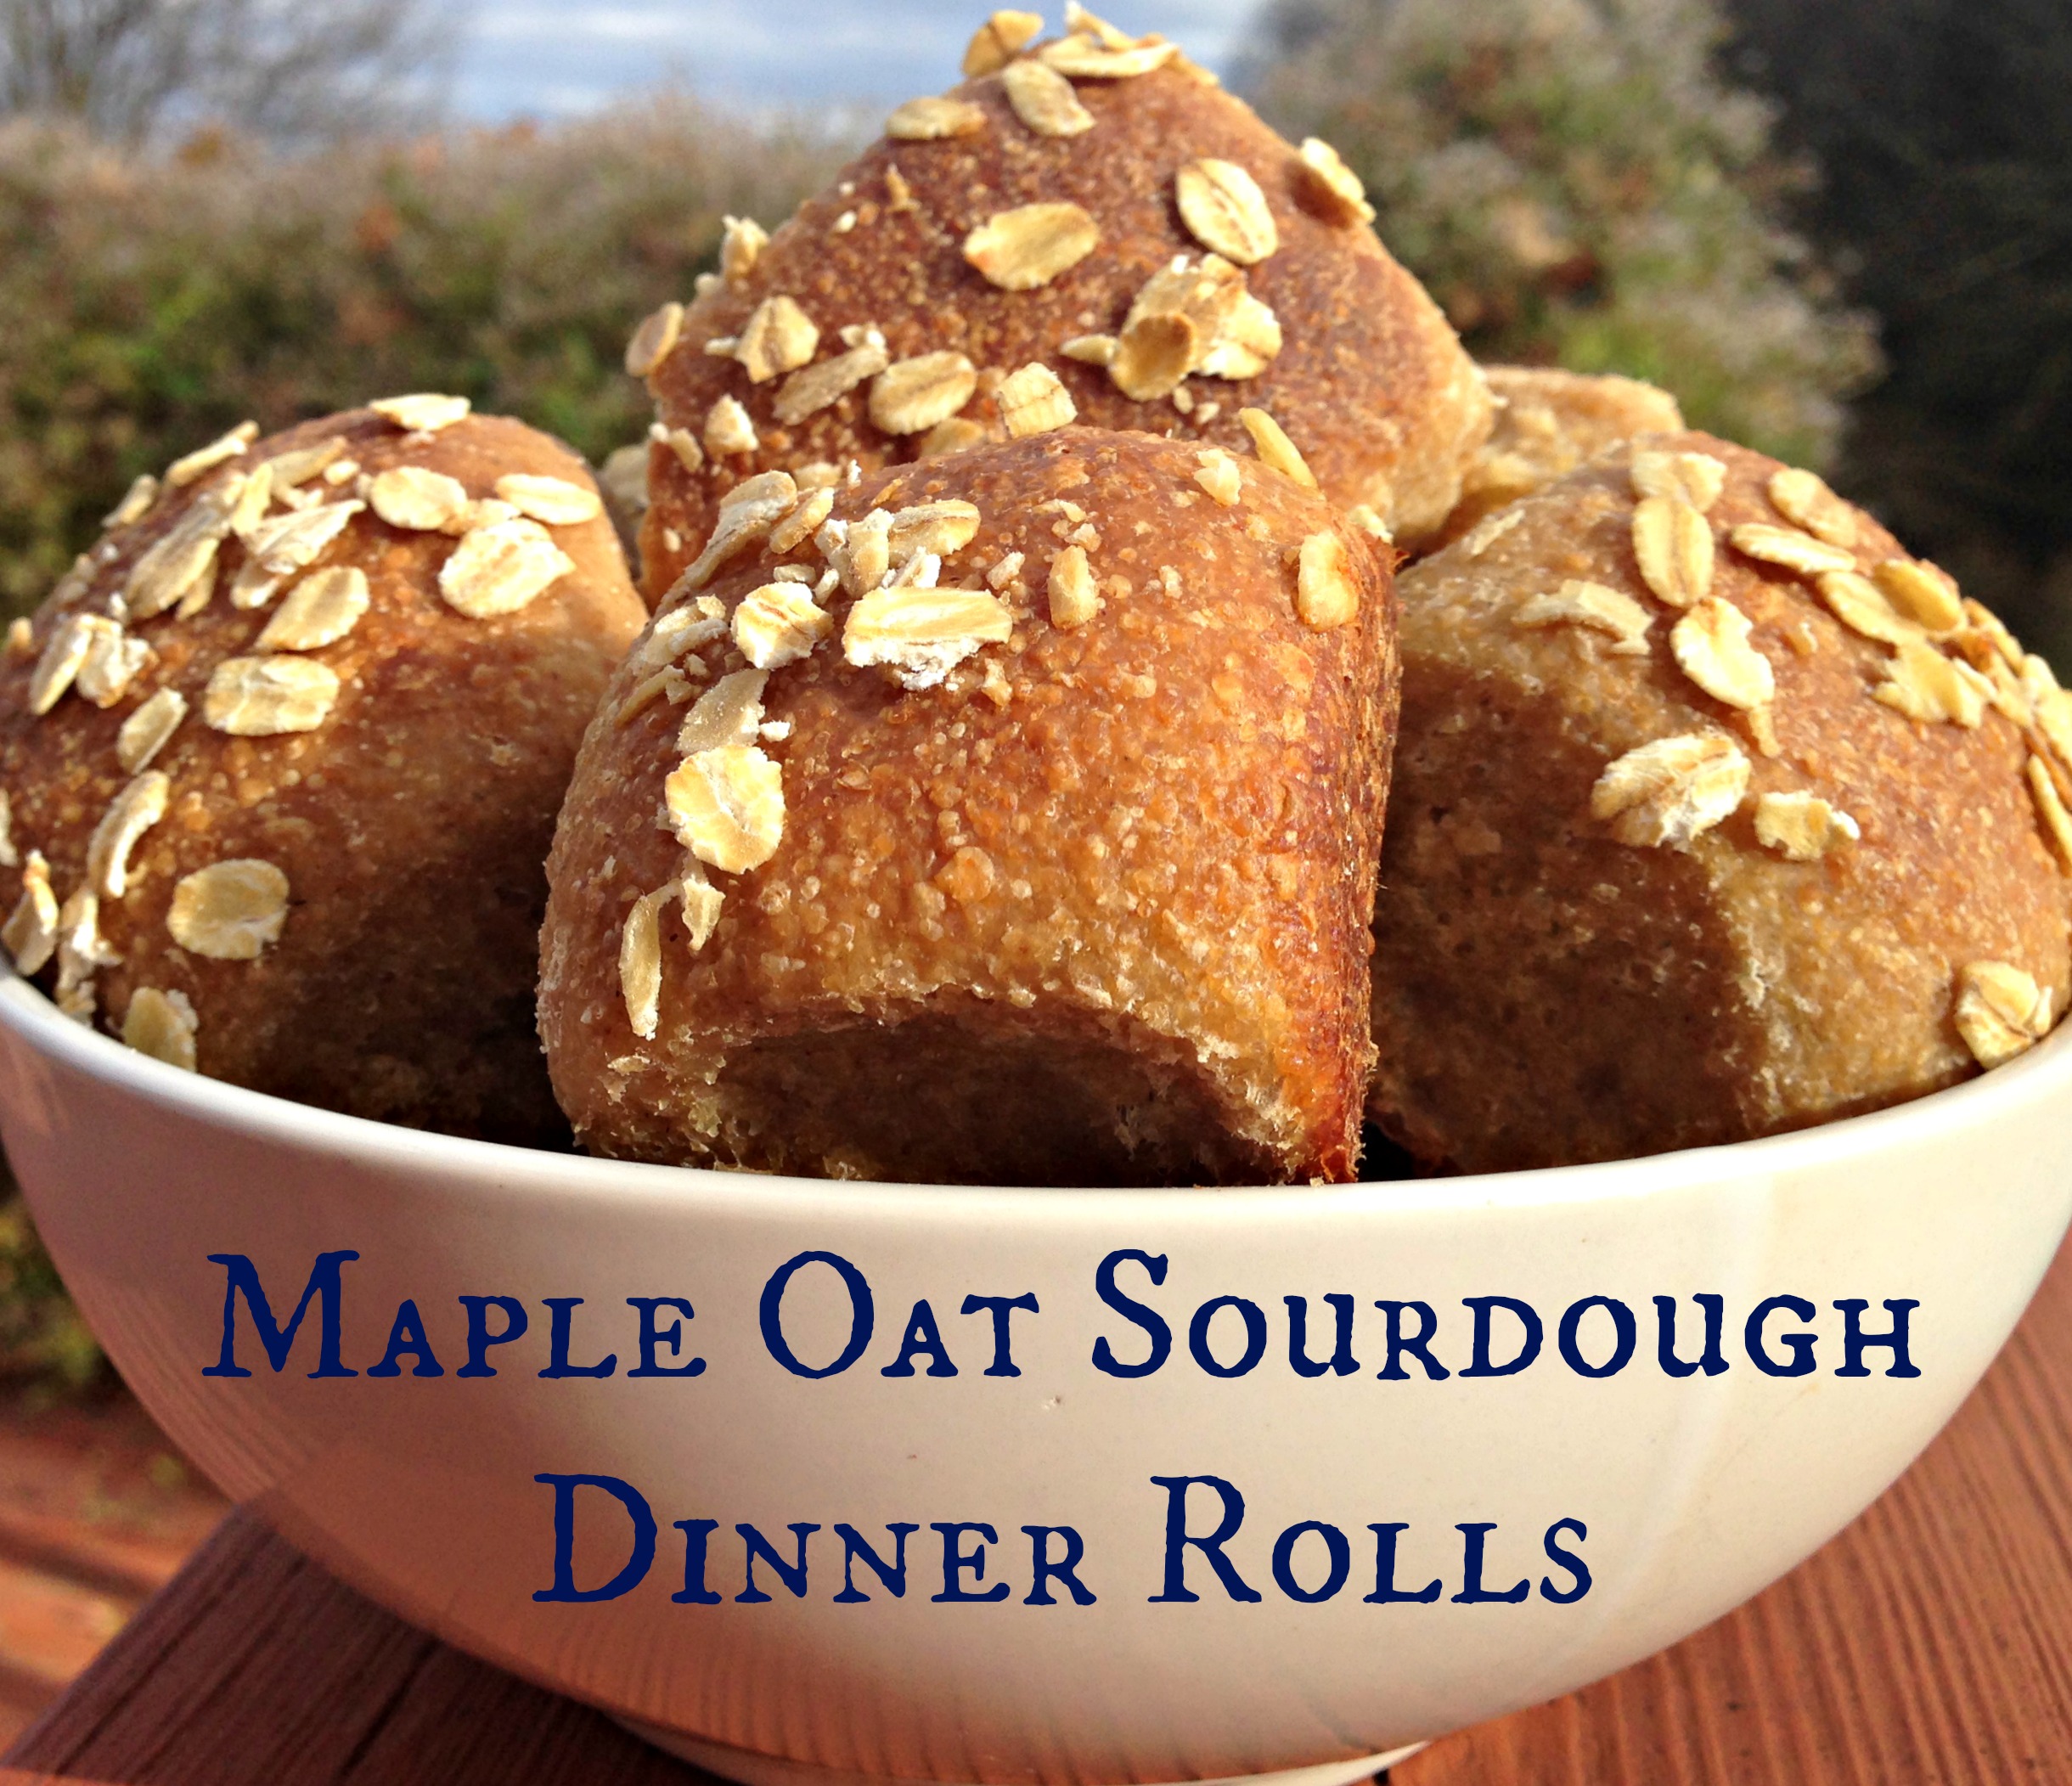 Maple Oat Sourdough Dinner Rolls on the Grain Mill Wagon, by Kristen @ Smithspirations